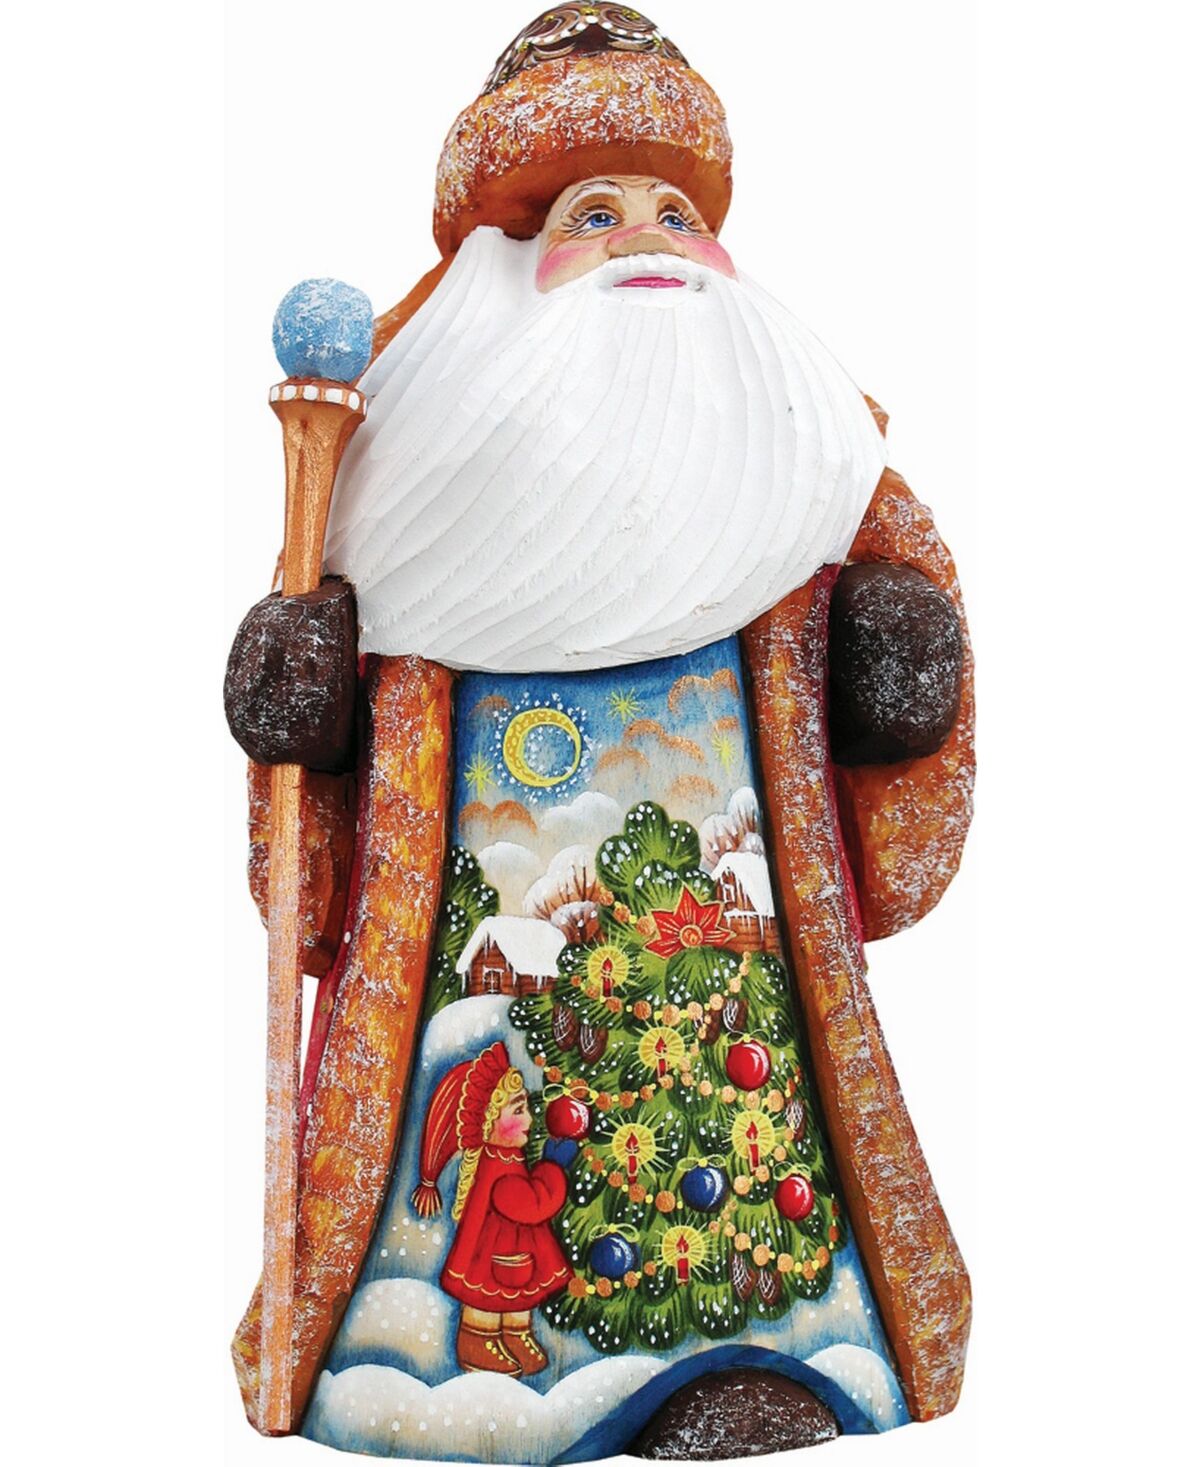 G.DeBrekht Woodcarved Hand Painted Santa Trim A Tree Figurine - Multi